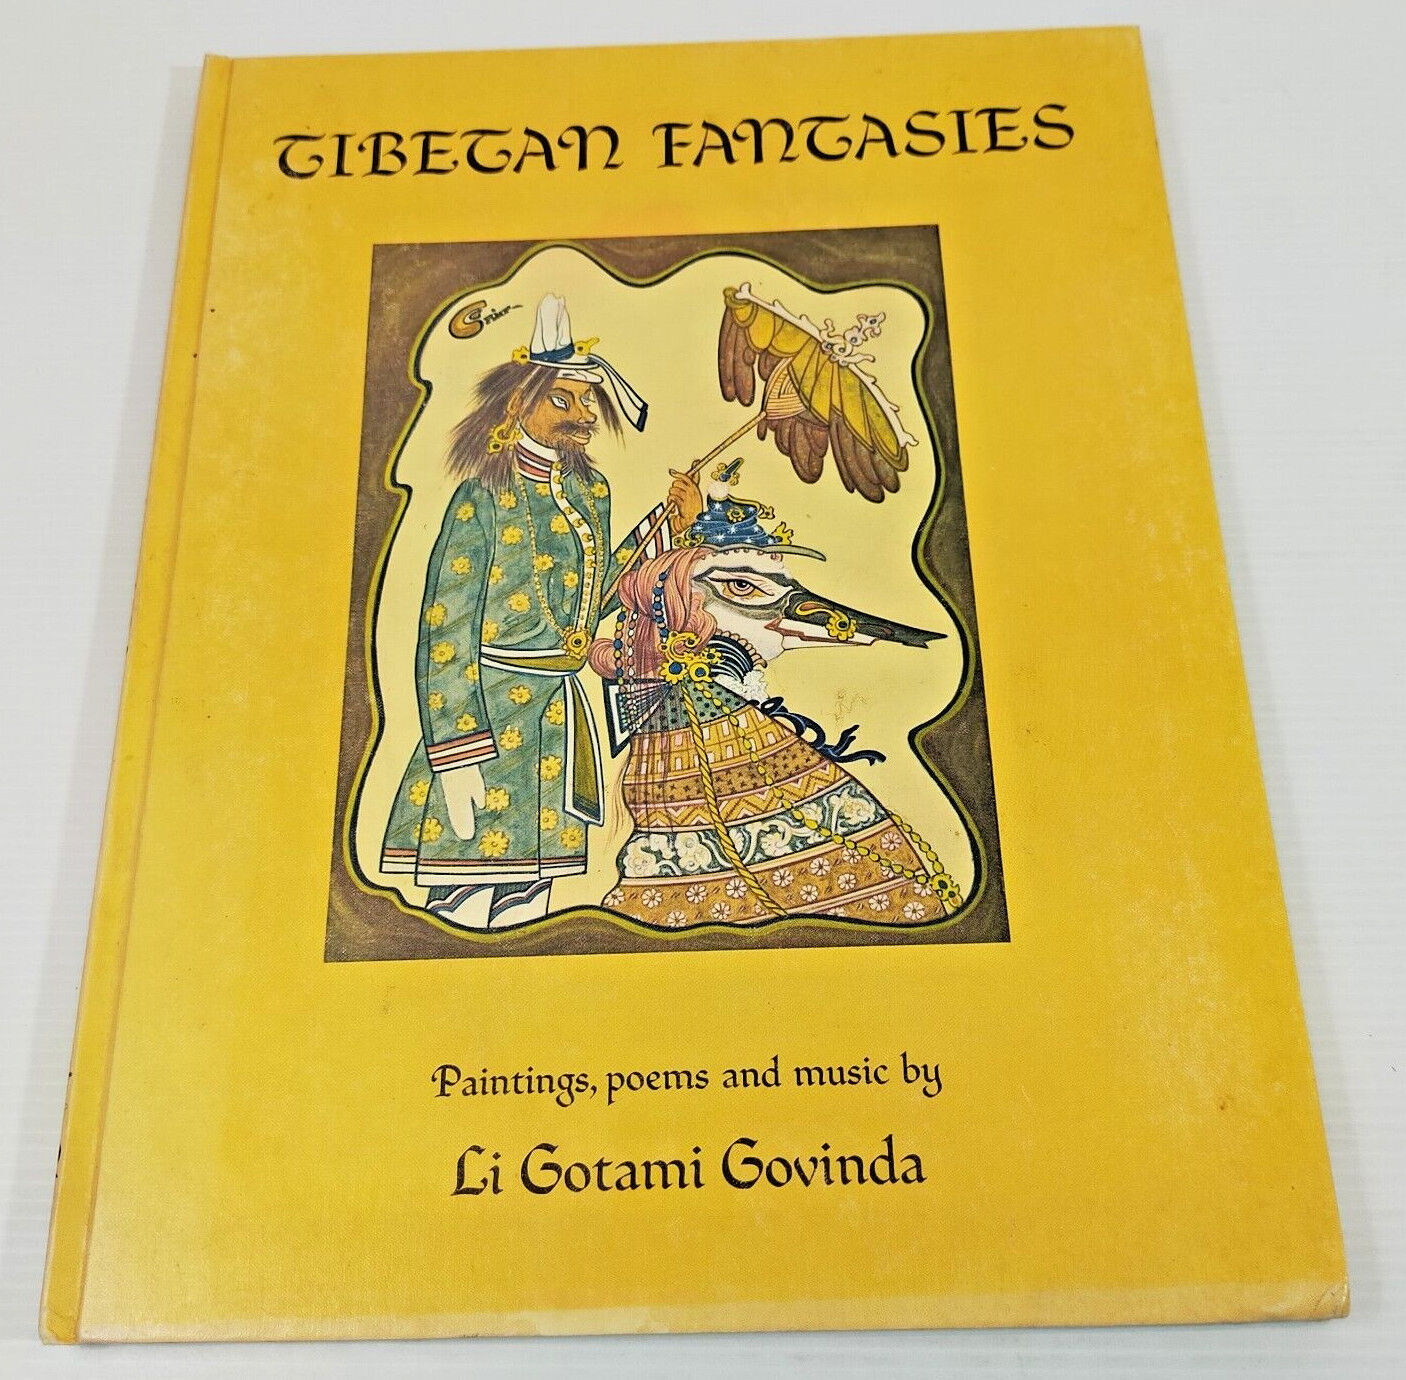 Tibetan Fantasies: Paintings, Poems and Music By Li Gotami Govinda Vintage 1976